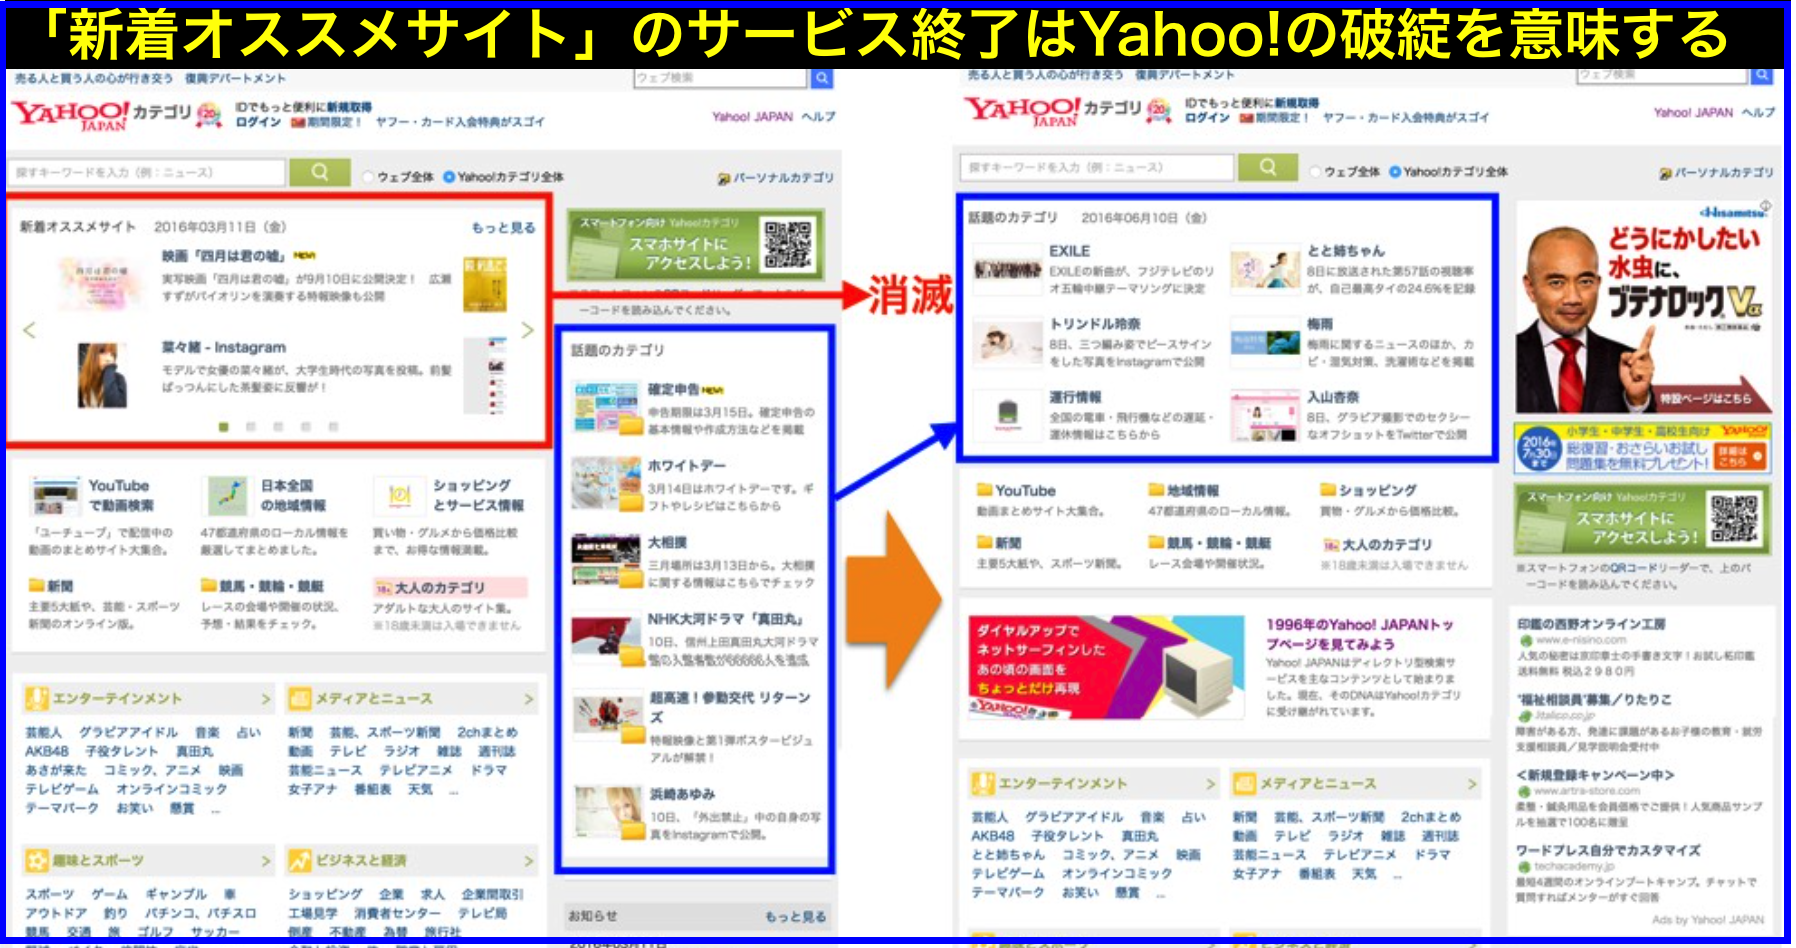 Yahoo!カテゴリ｢新着オススメサイト｣サービスが6/8に終了